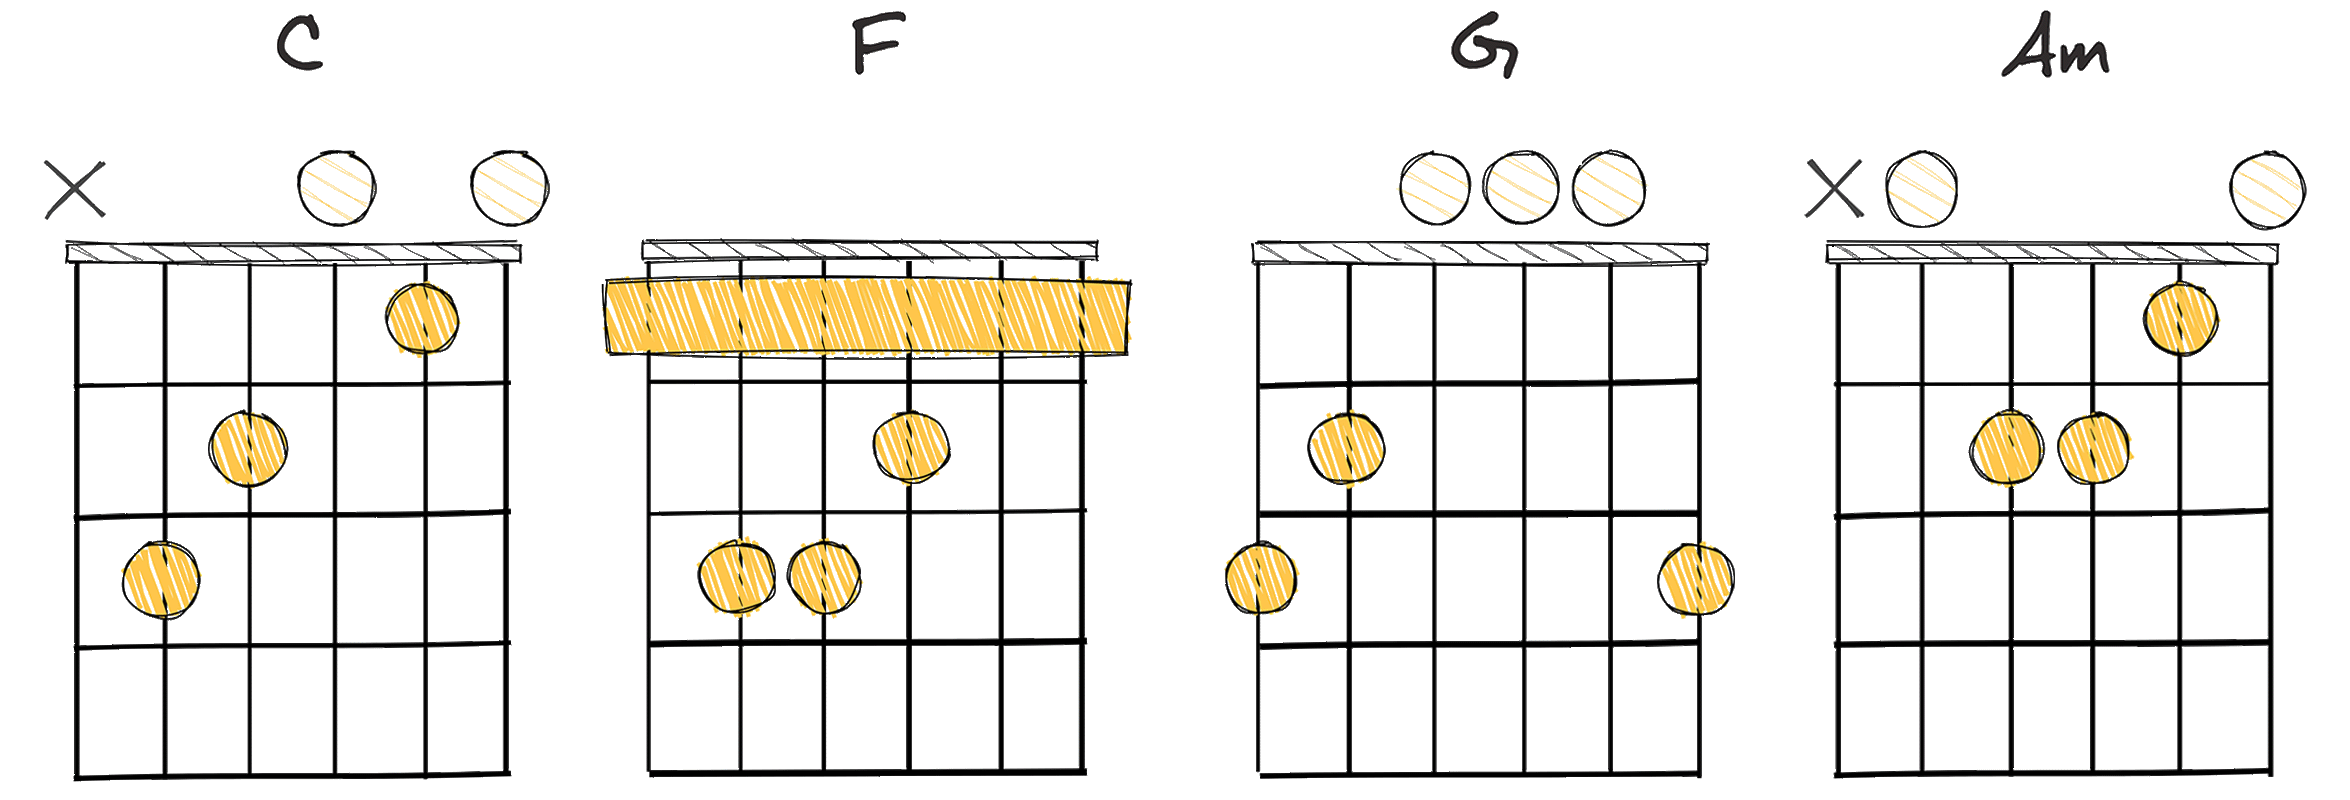 I-IV-V-vi (1-4-5-6) chords diagram